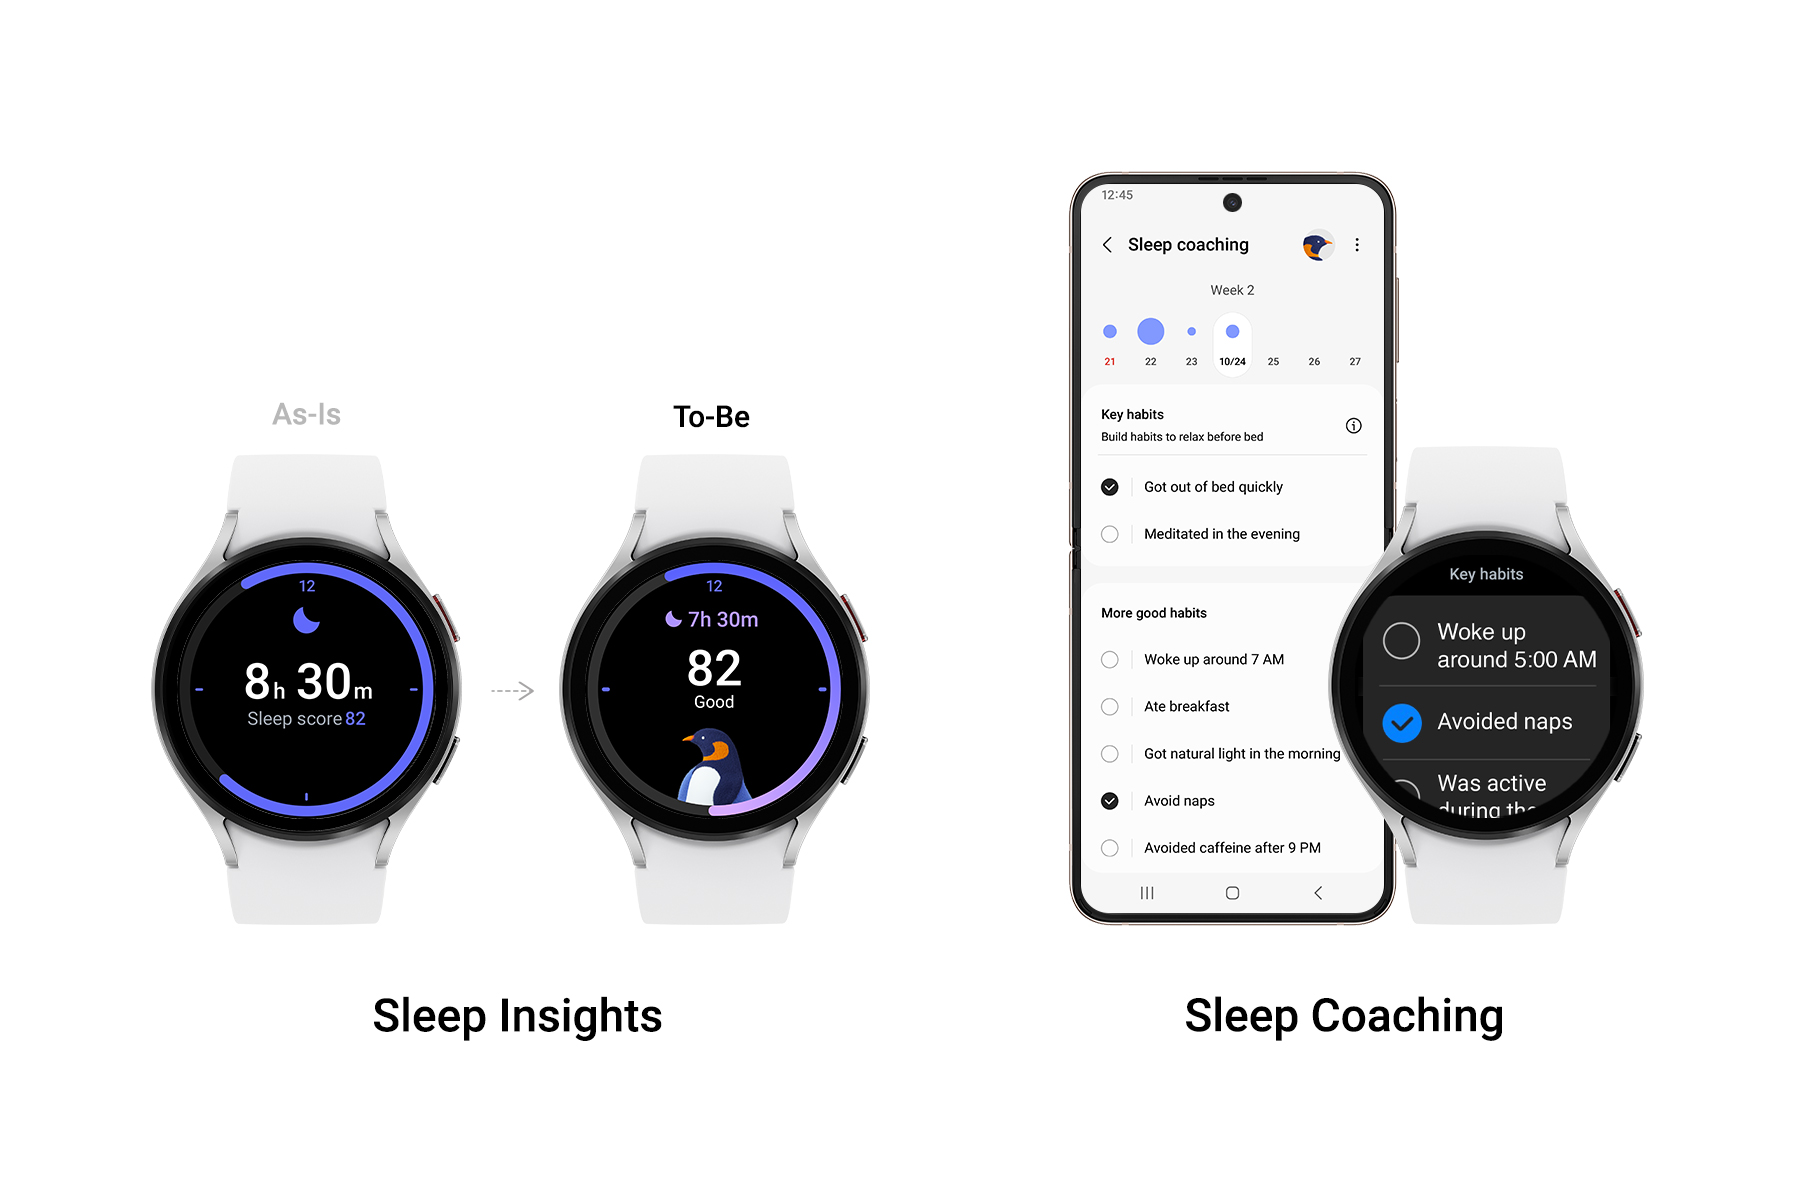 One UI 5 Watch Sleep Insights and Sleep Coaching features